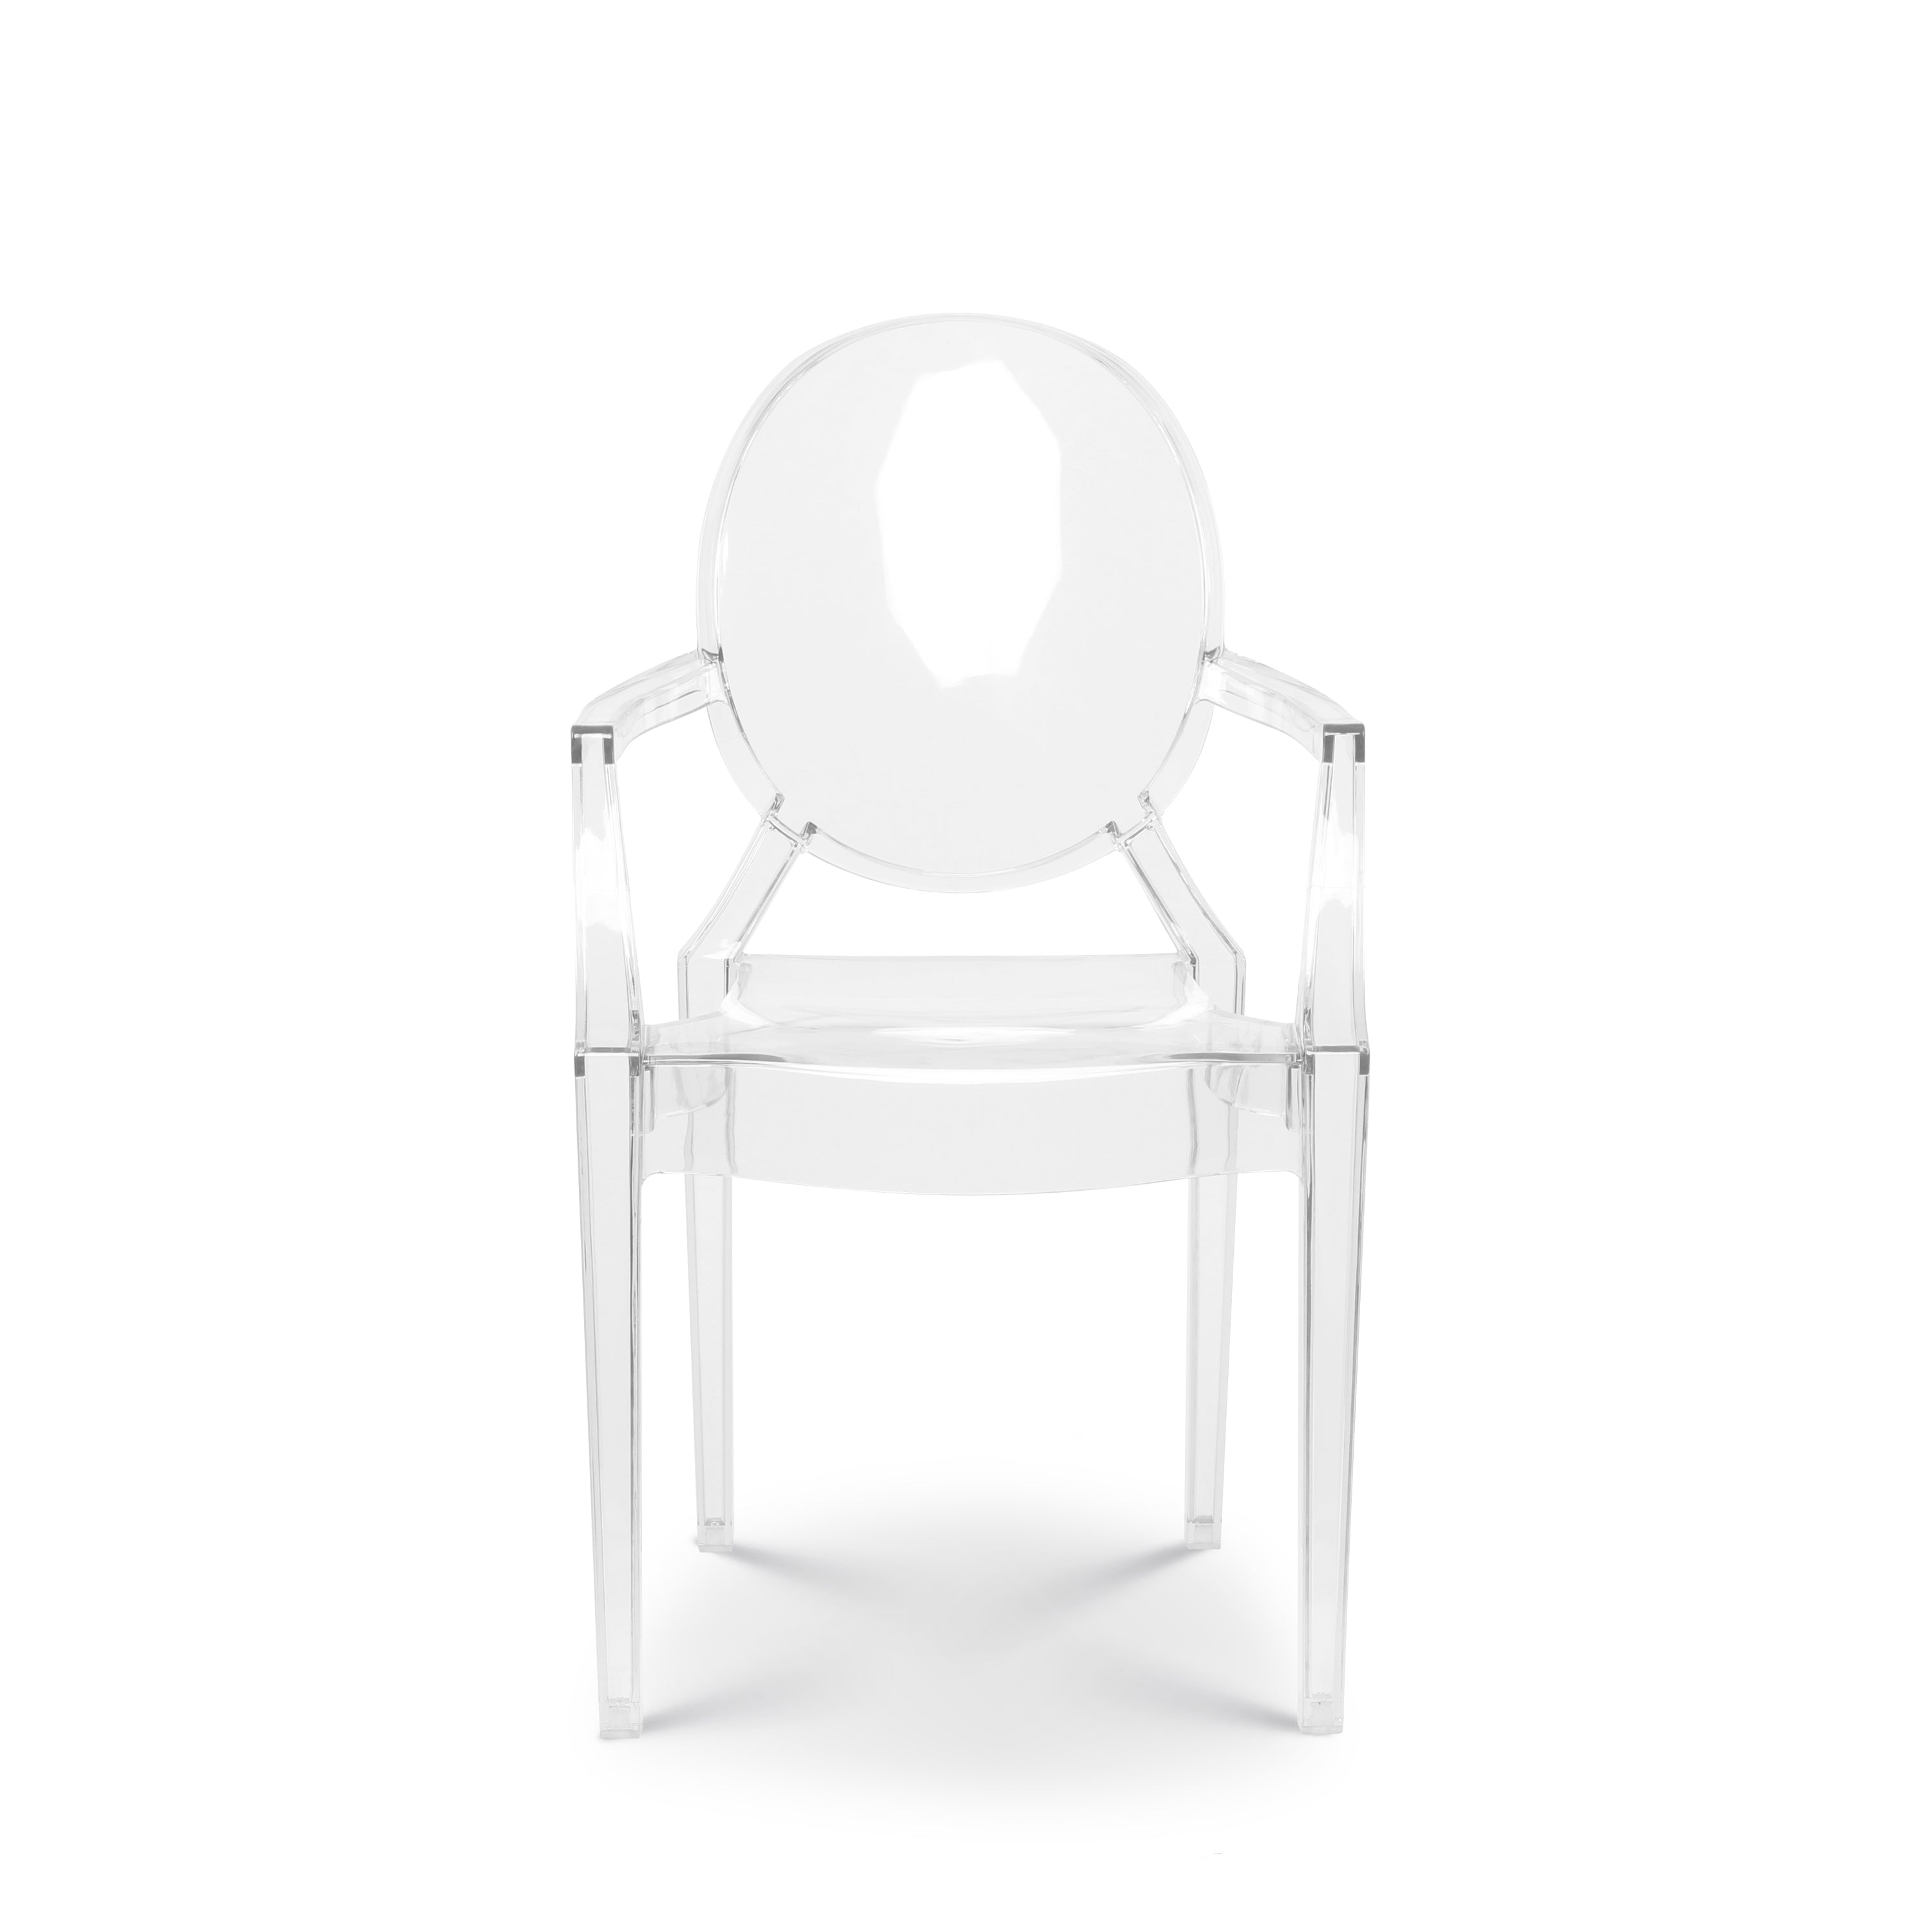 Silla fantasma de policarbonato con brazos, sillas de comedor transparentes  de grado comercial, sillas transparentes con respaldo flexible cómodo